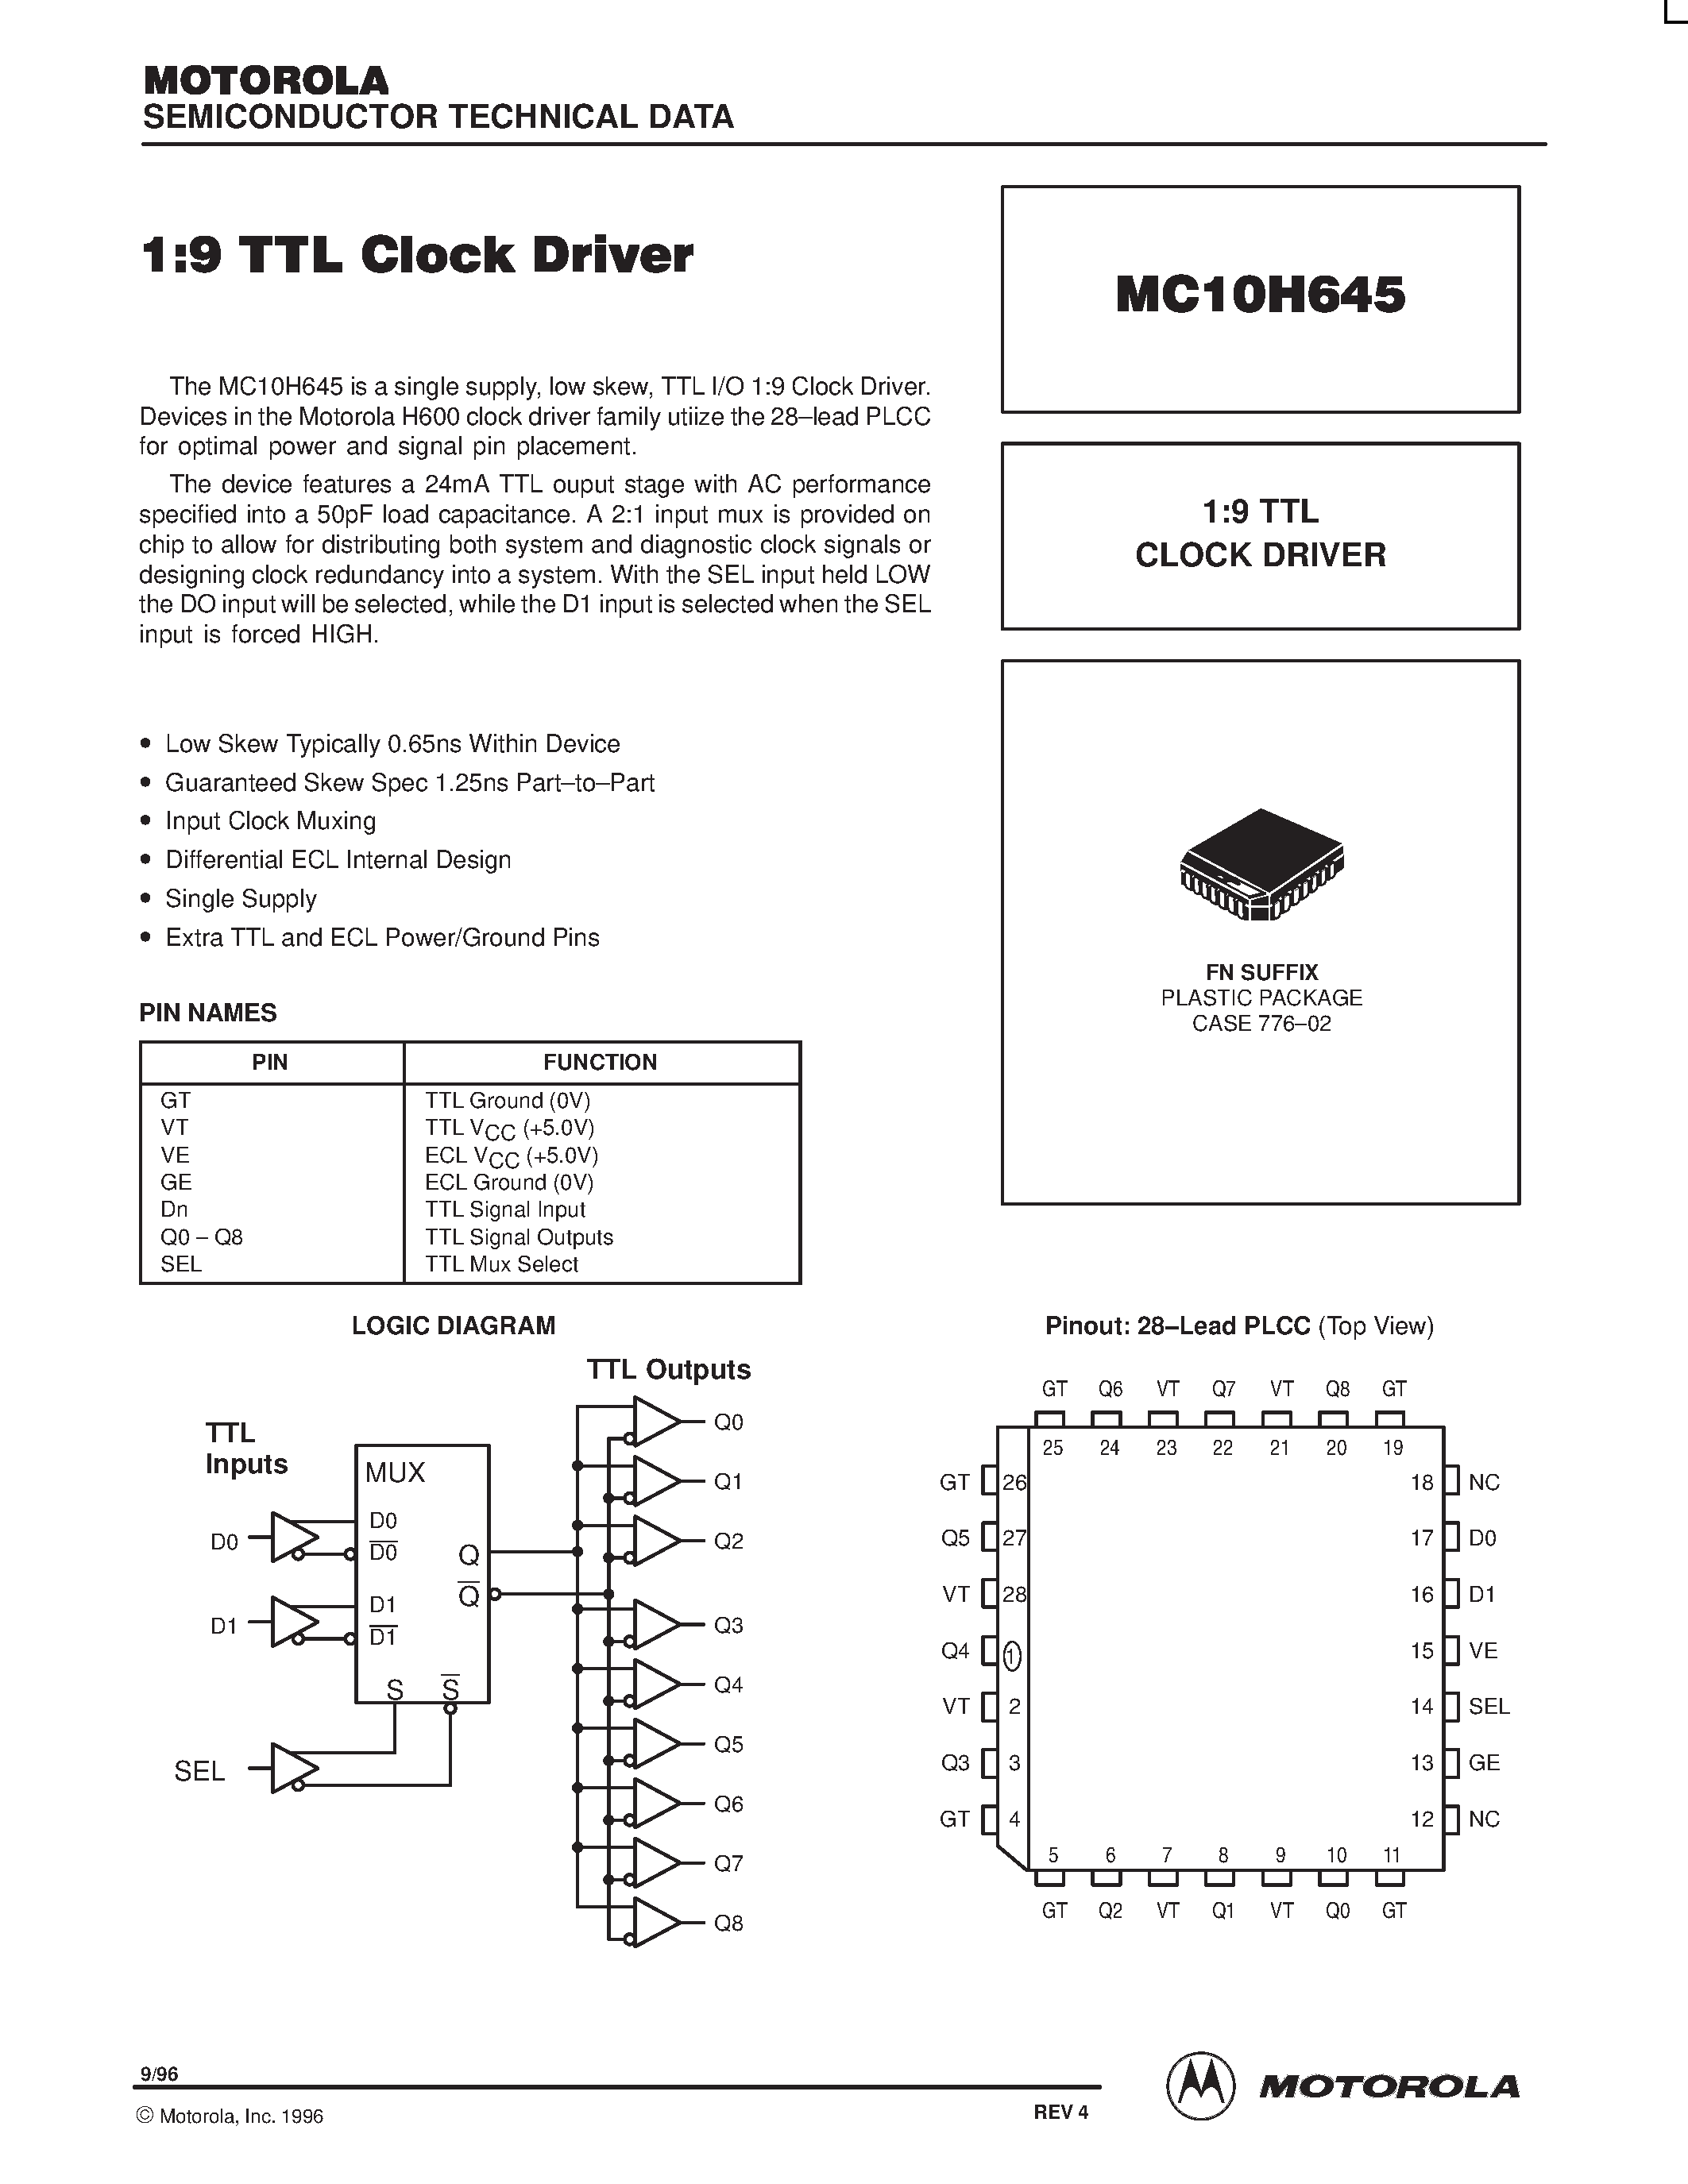 Datasheet MC10H645 - 1:9 TTL CLOCK DRIVER page 1